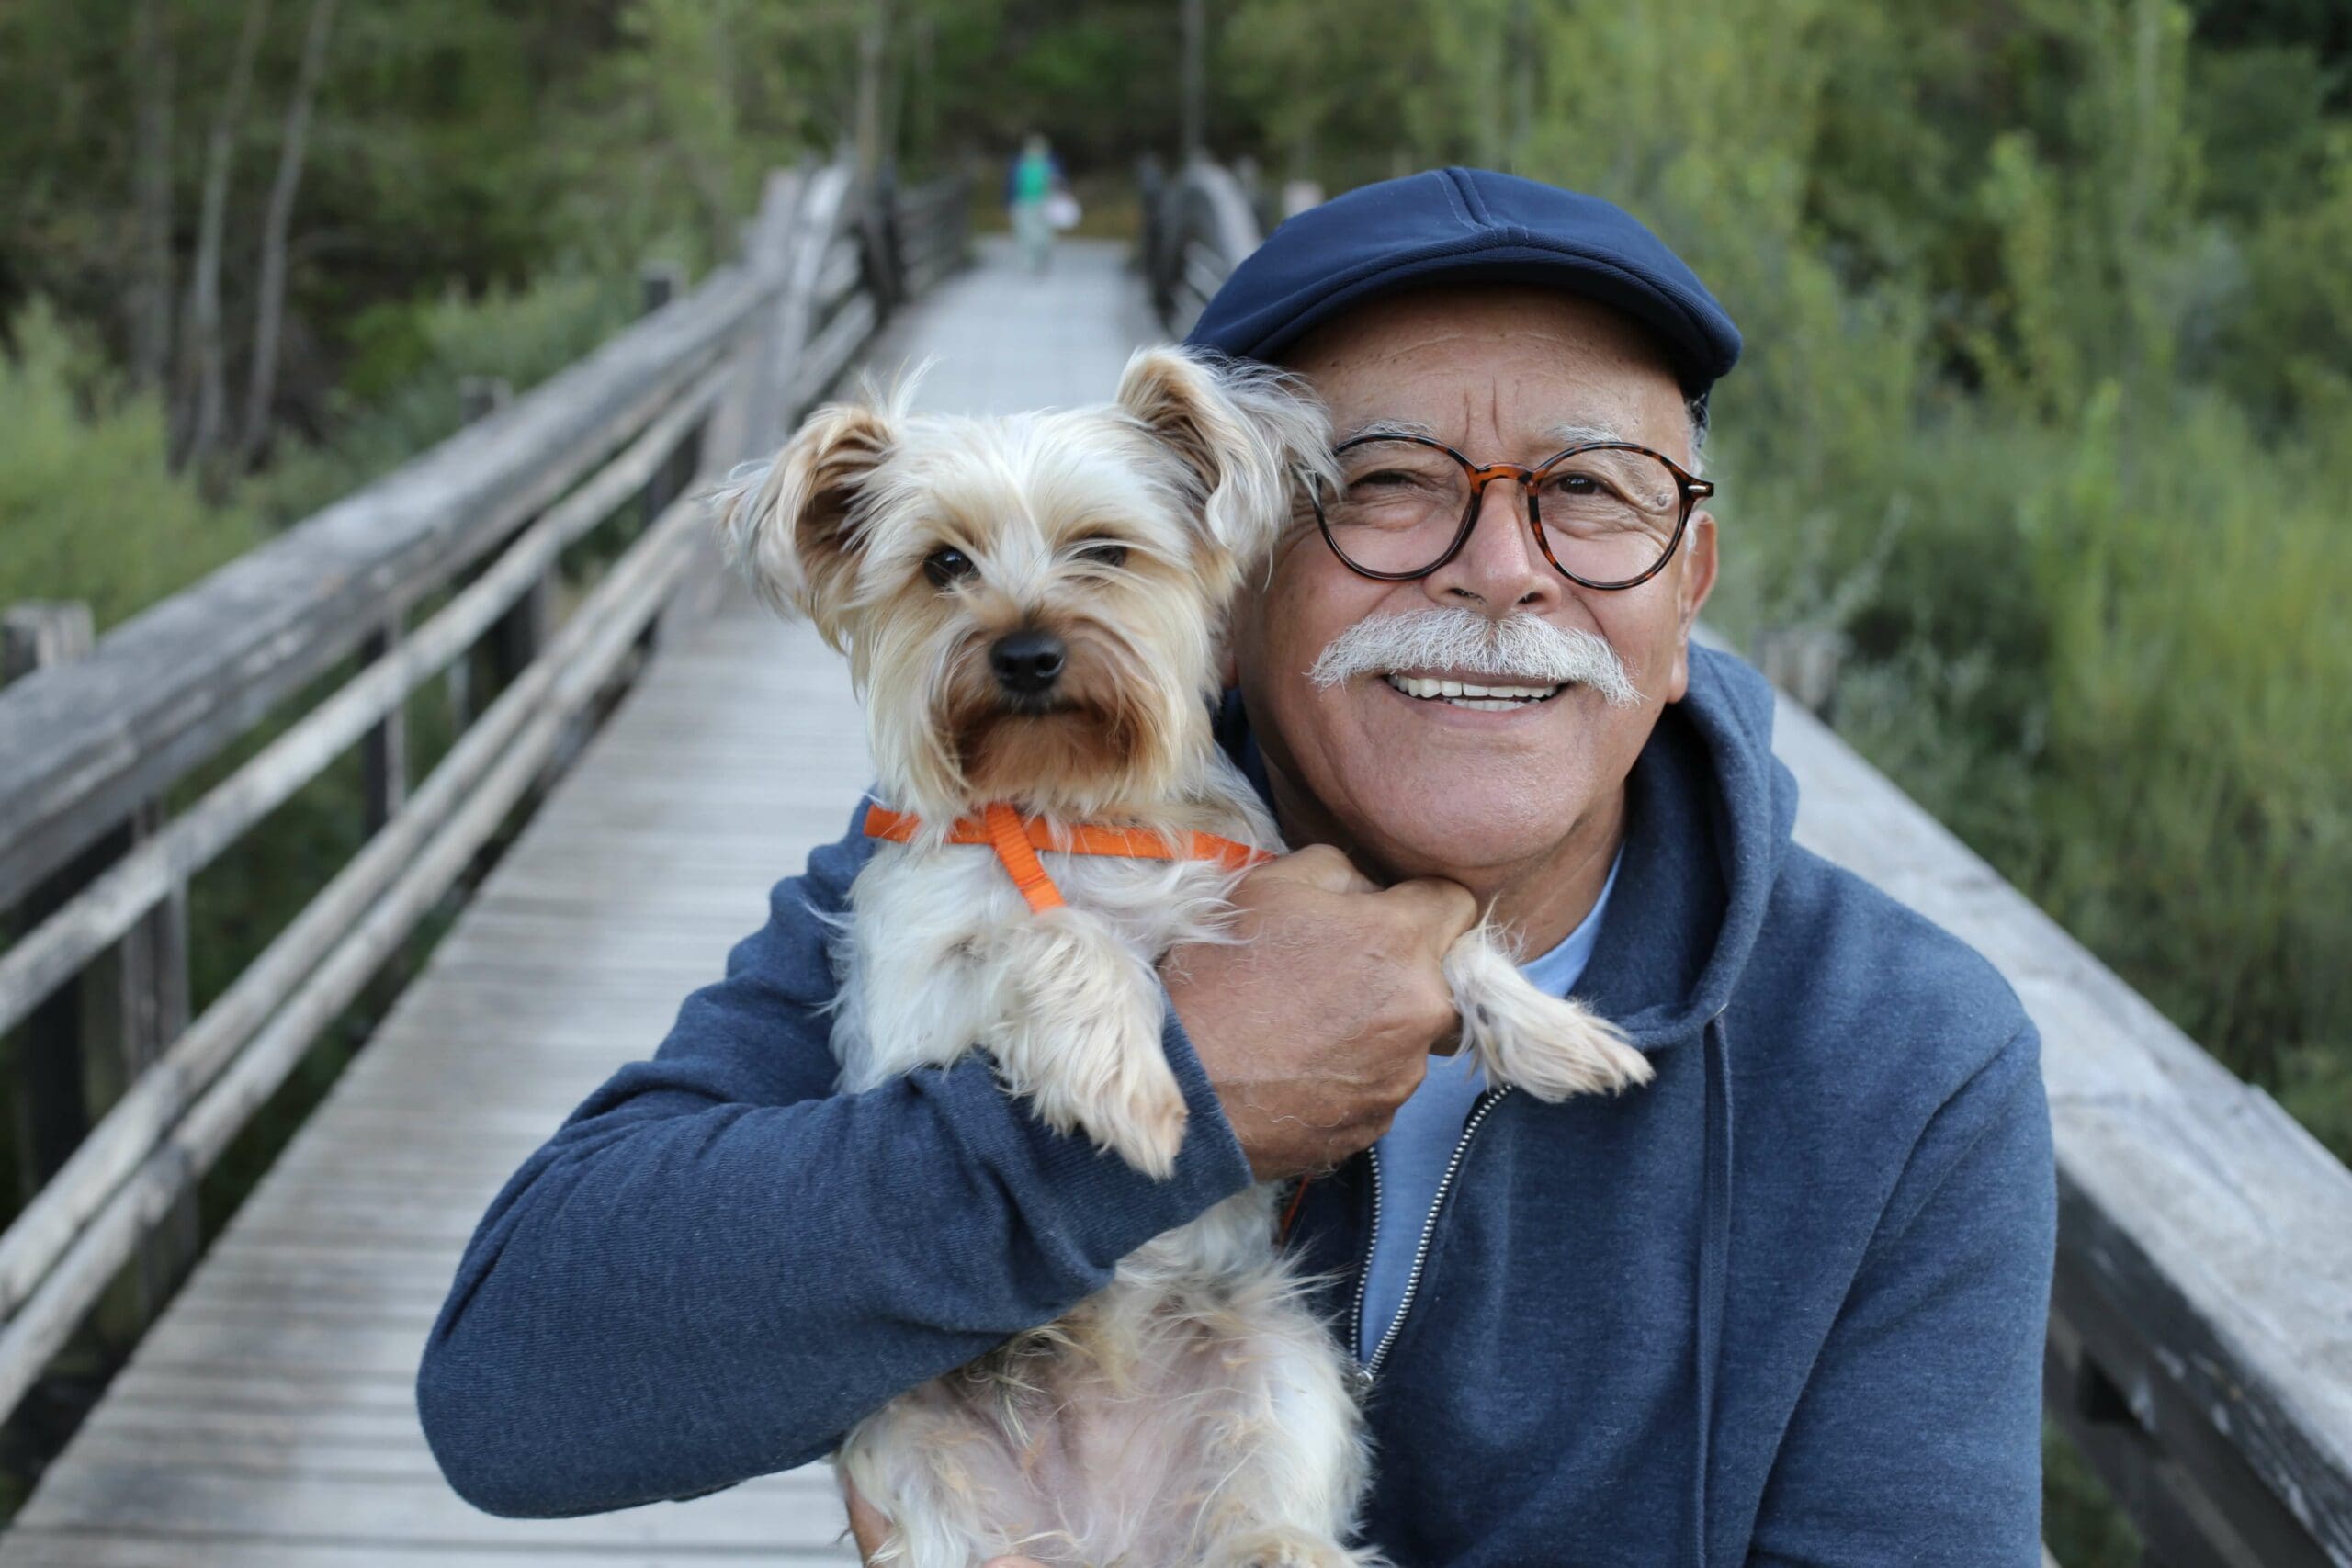 Smiling man hold his dog.